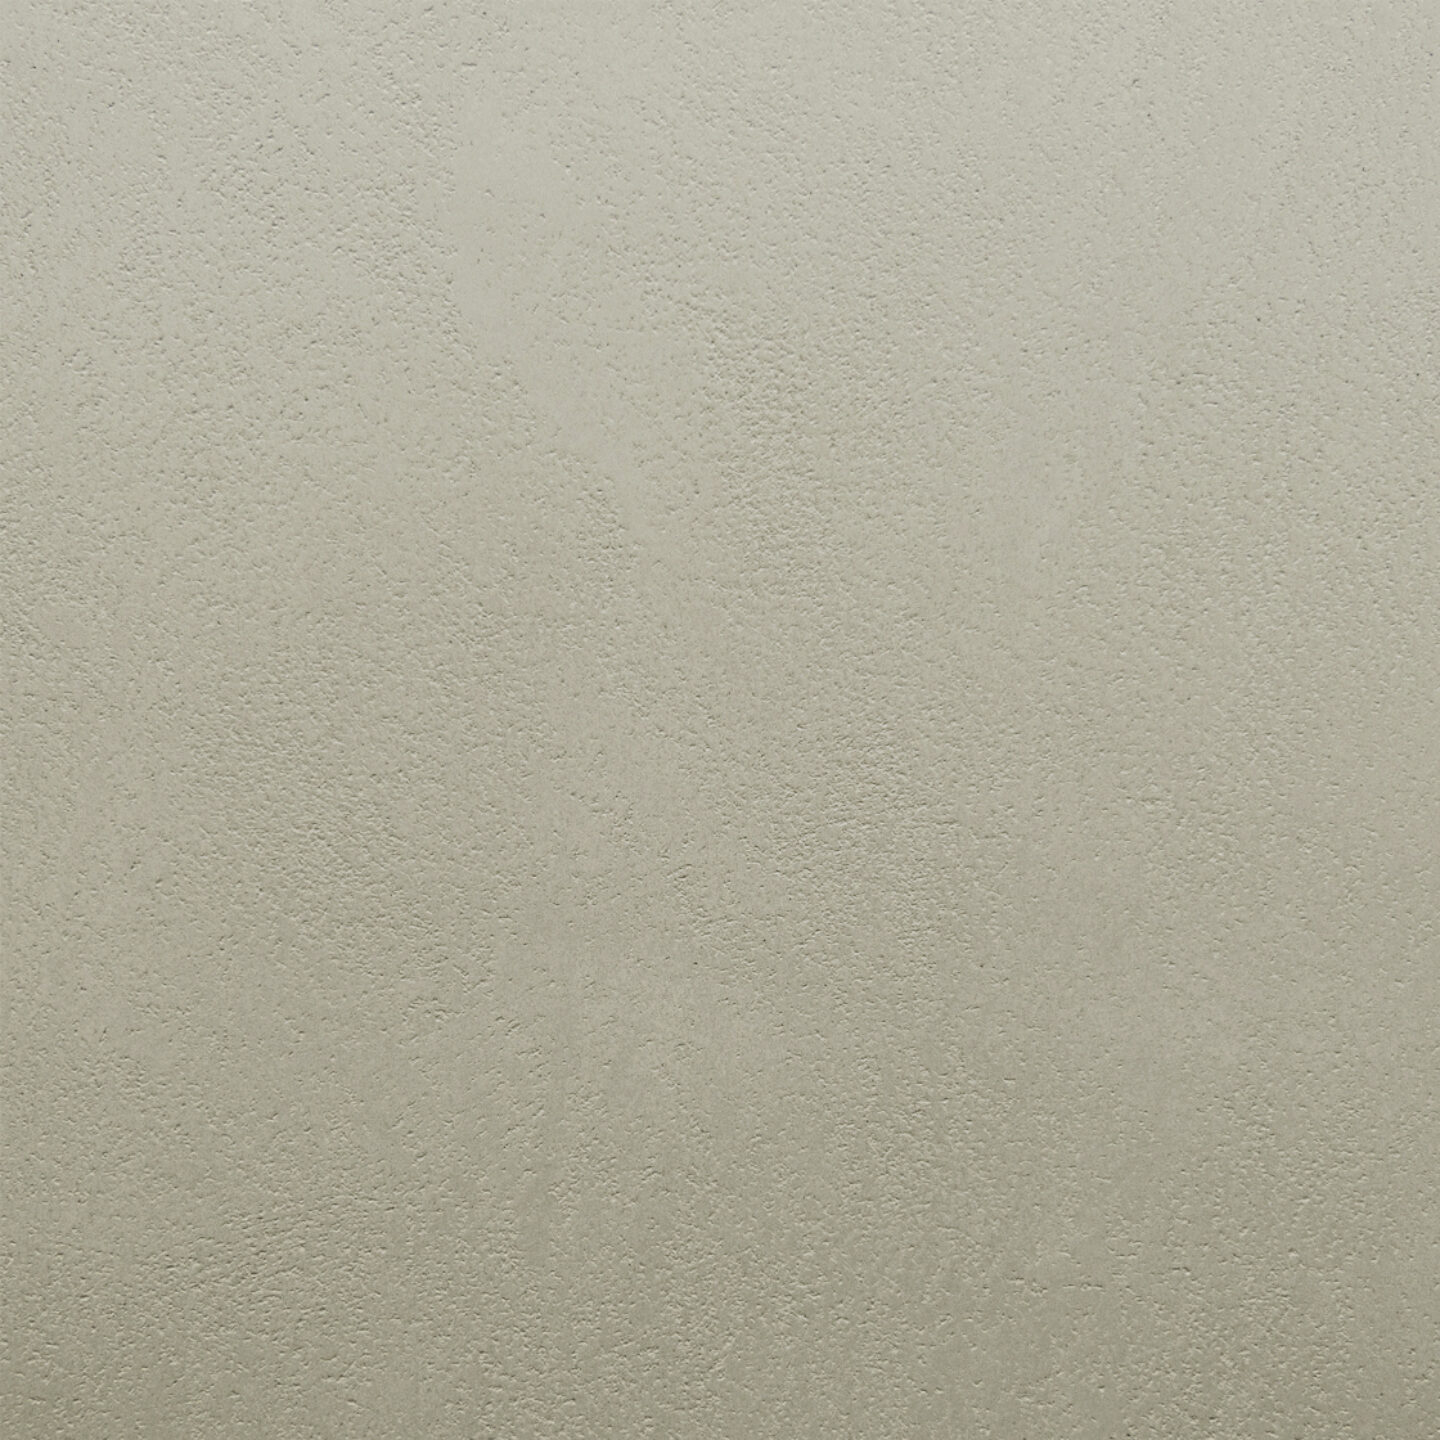 Close up of Armourcoat leatherstone exterior polished plaster finish - 64